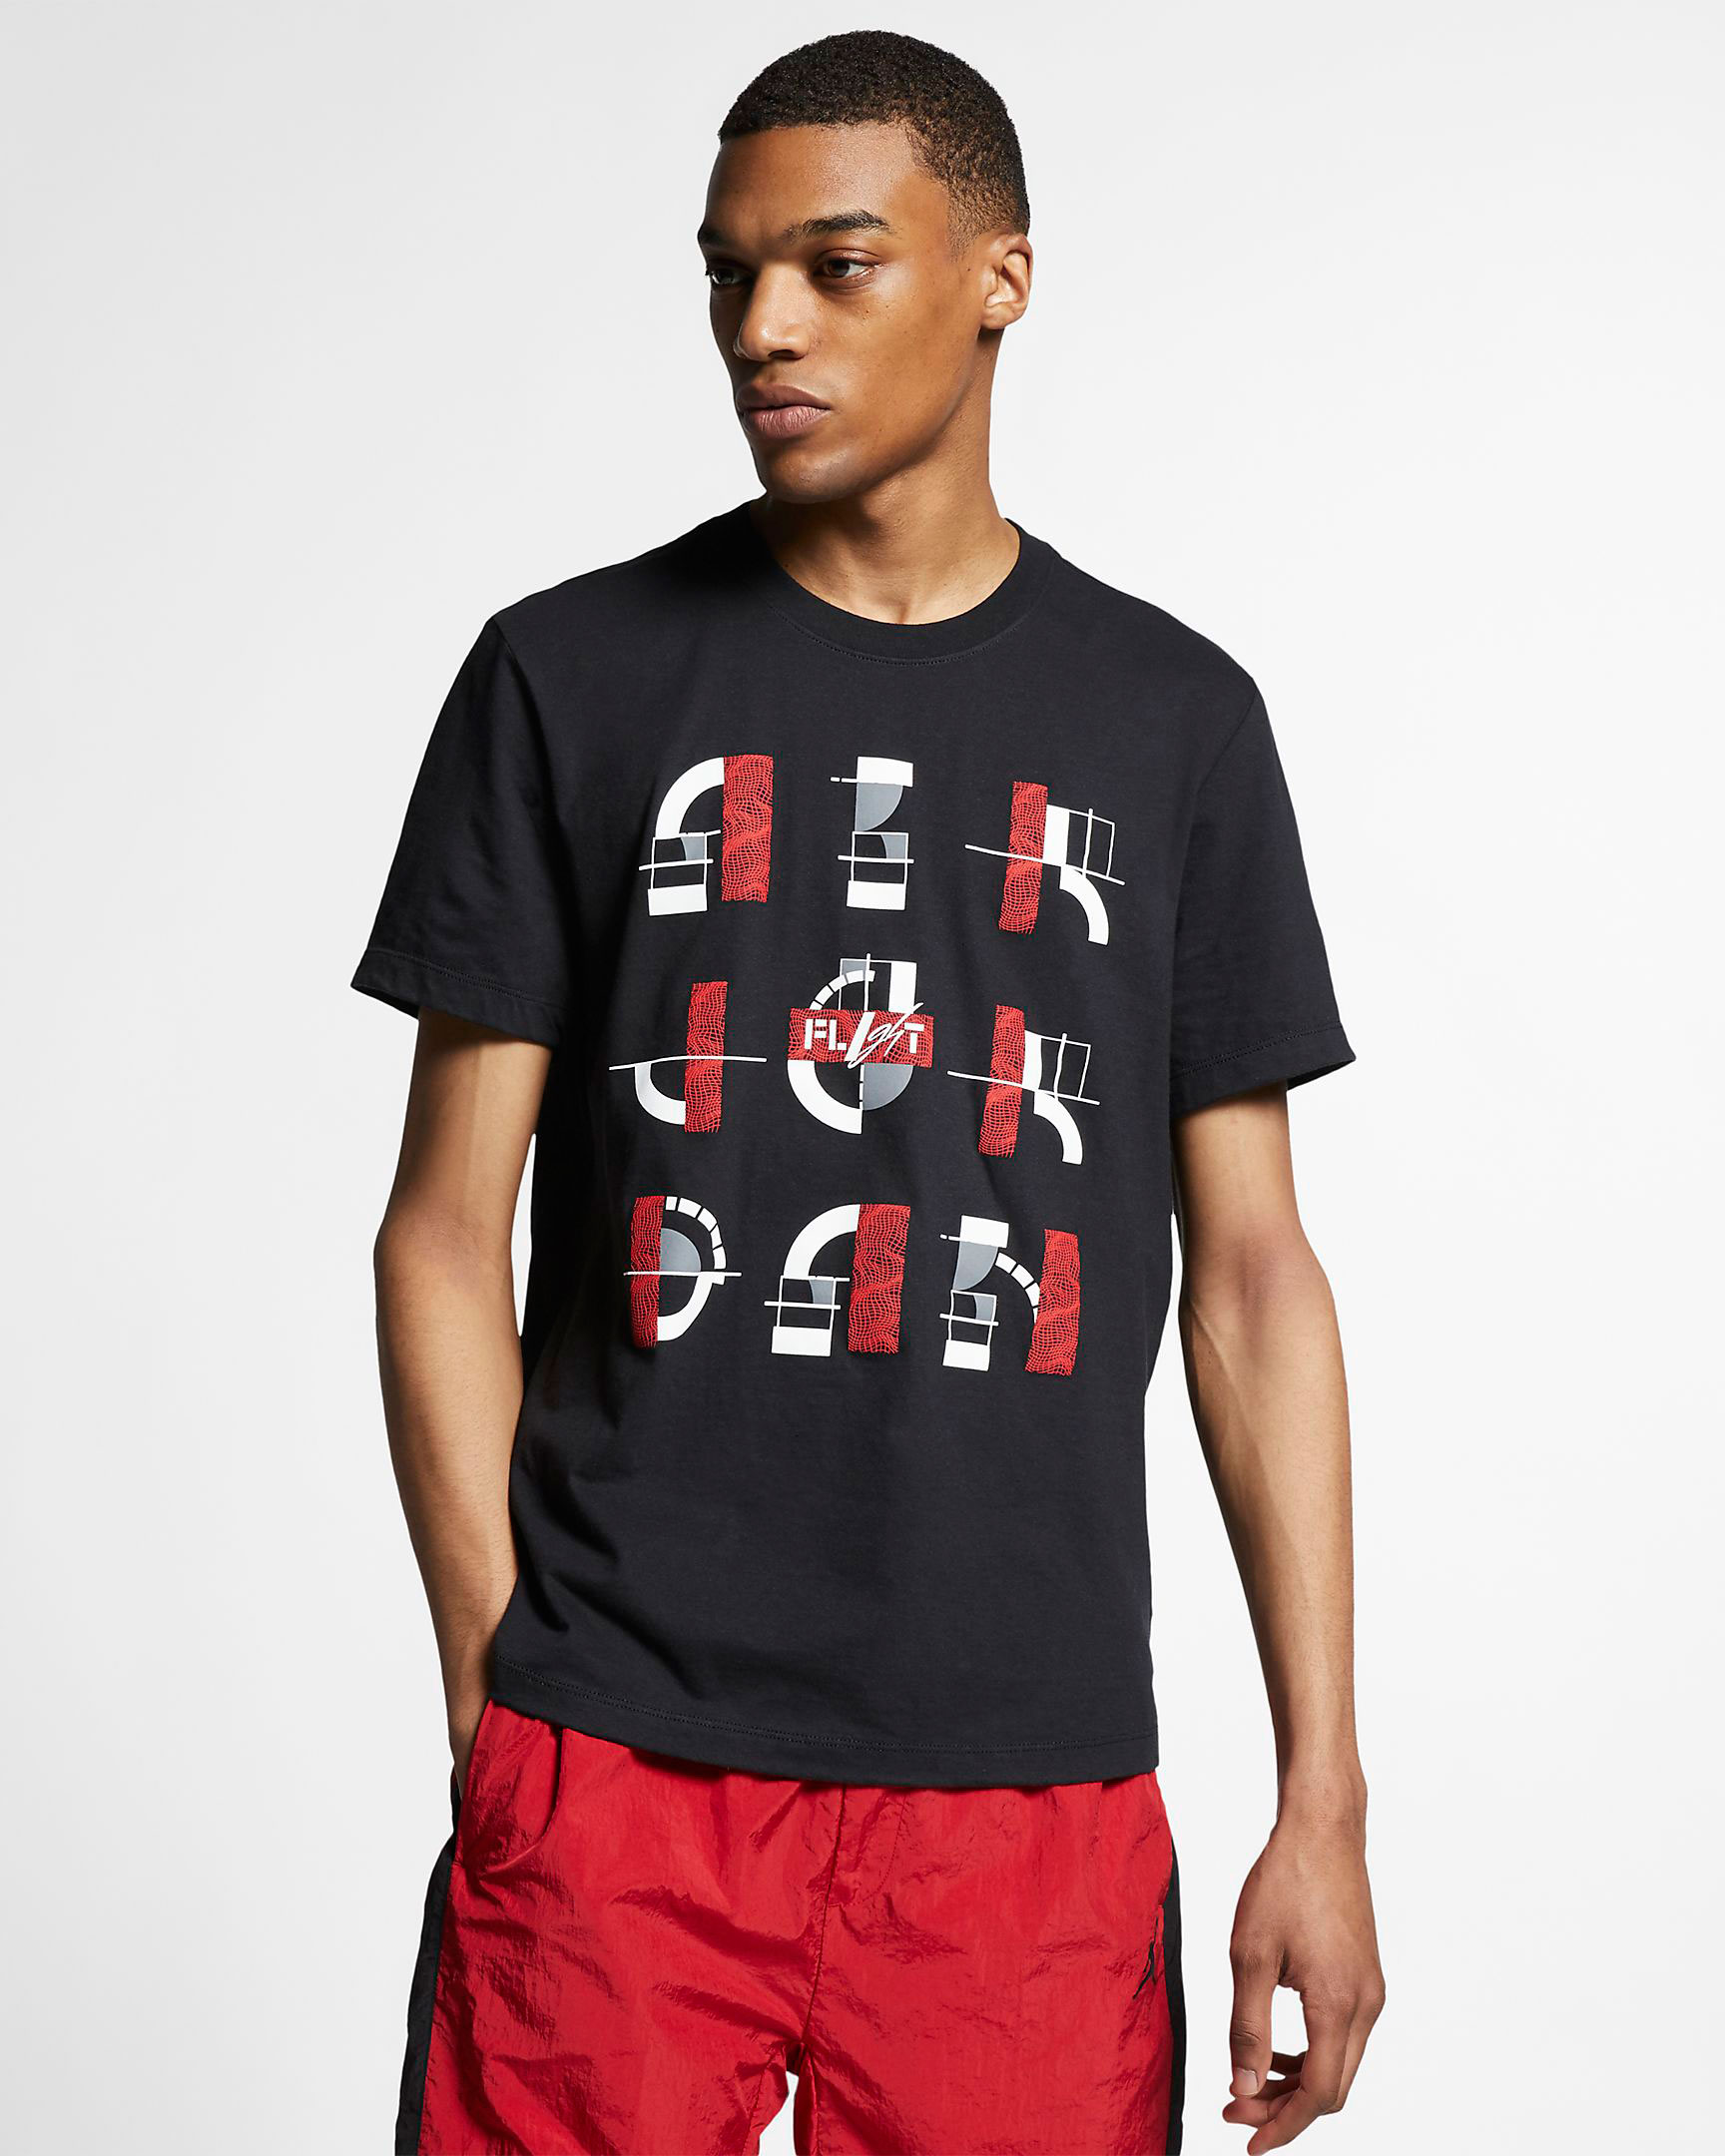 Bred Air Jordan 4 2019 Sneaker Shirts | SneakerFits.com